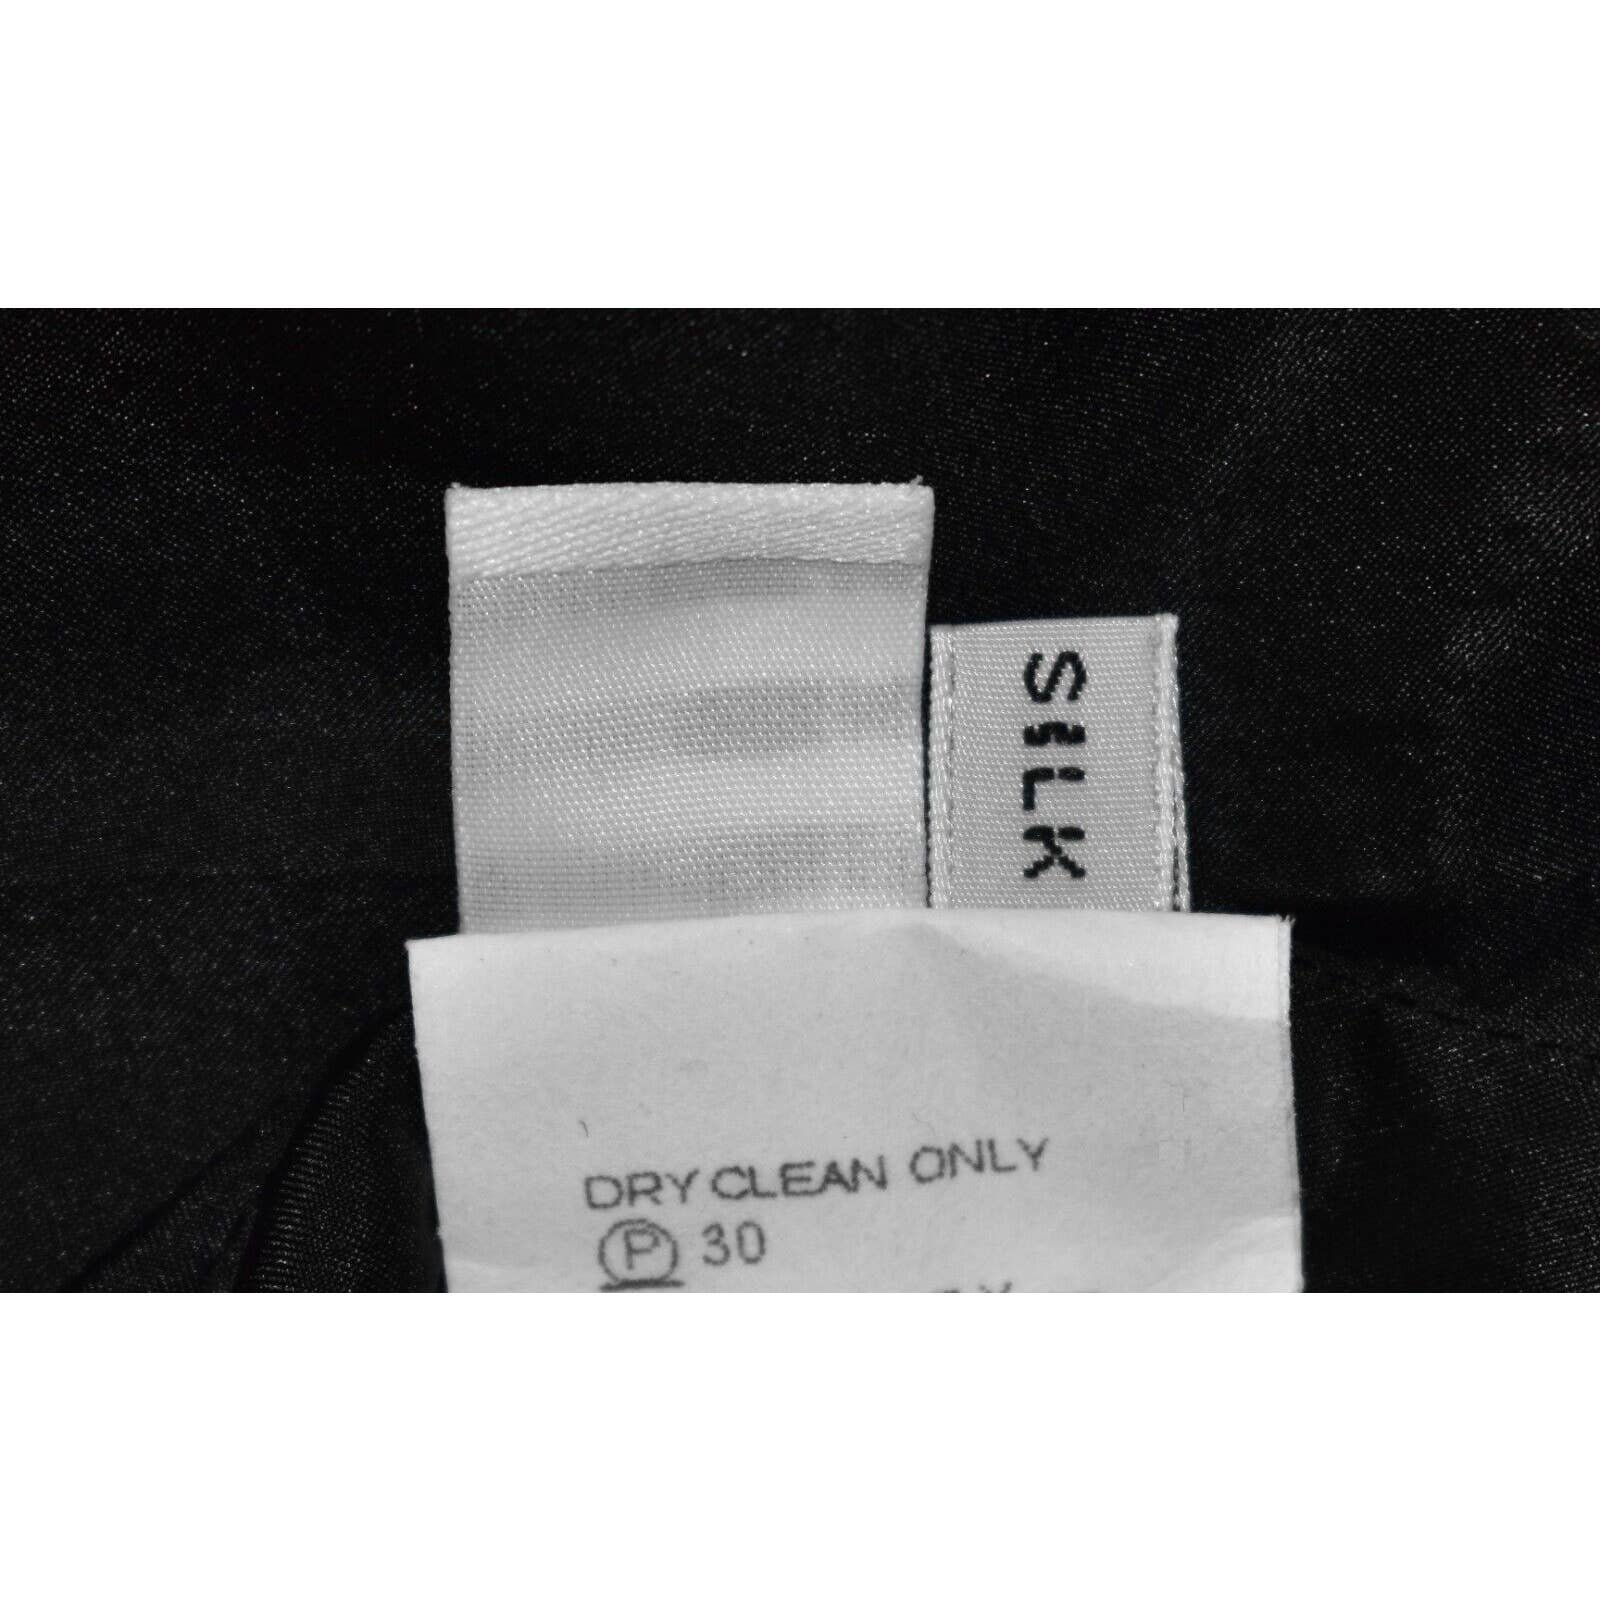 floor price B2 Auth EASTON PEARSON Black Silk Ruffle Pleated Flared Midi Skirt Size 12 p5297XLRW US Sale